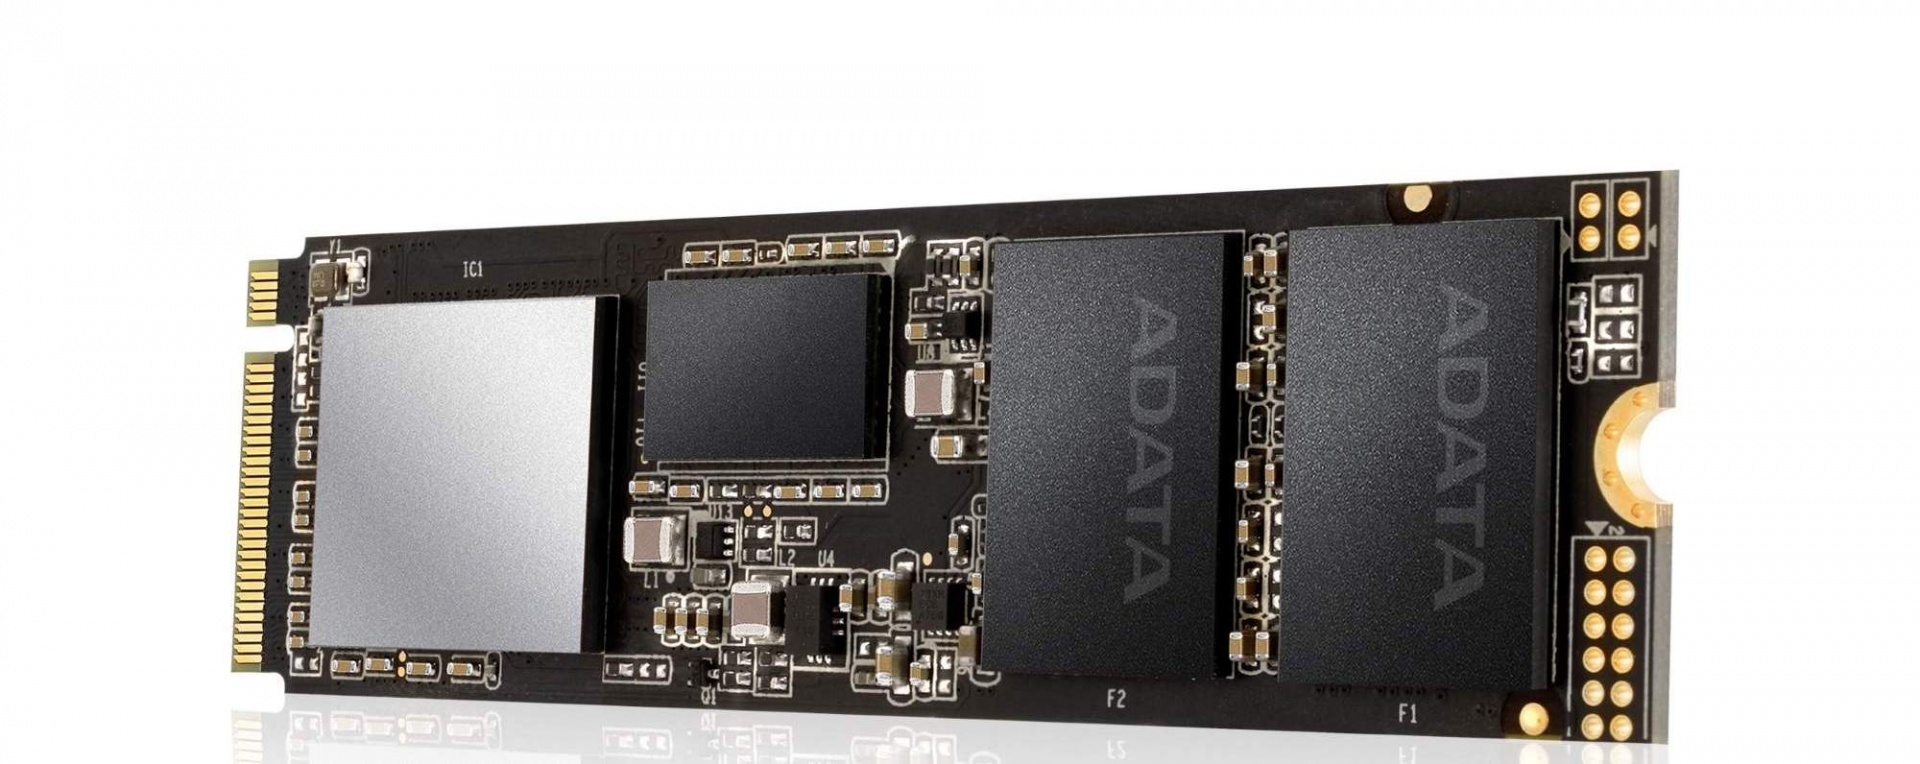 Накопитель SSD Adata XPG SX8200 Pro — 2 ТБ и цена чуть более 300 евро